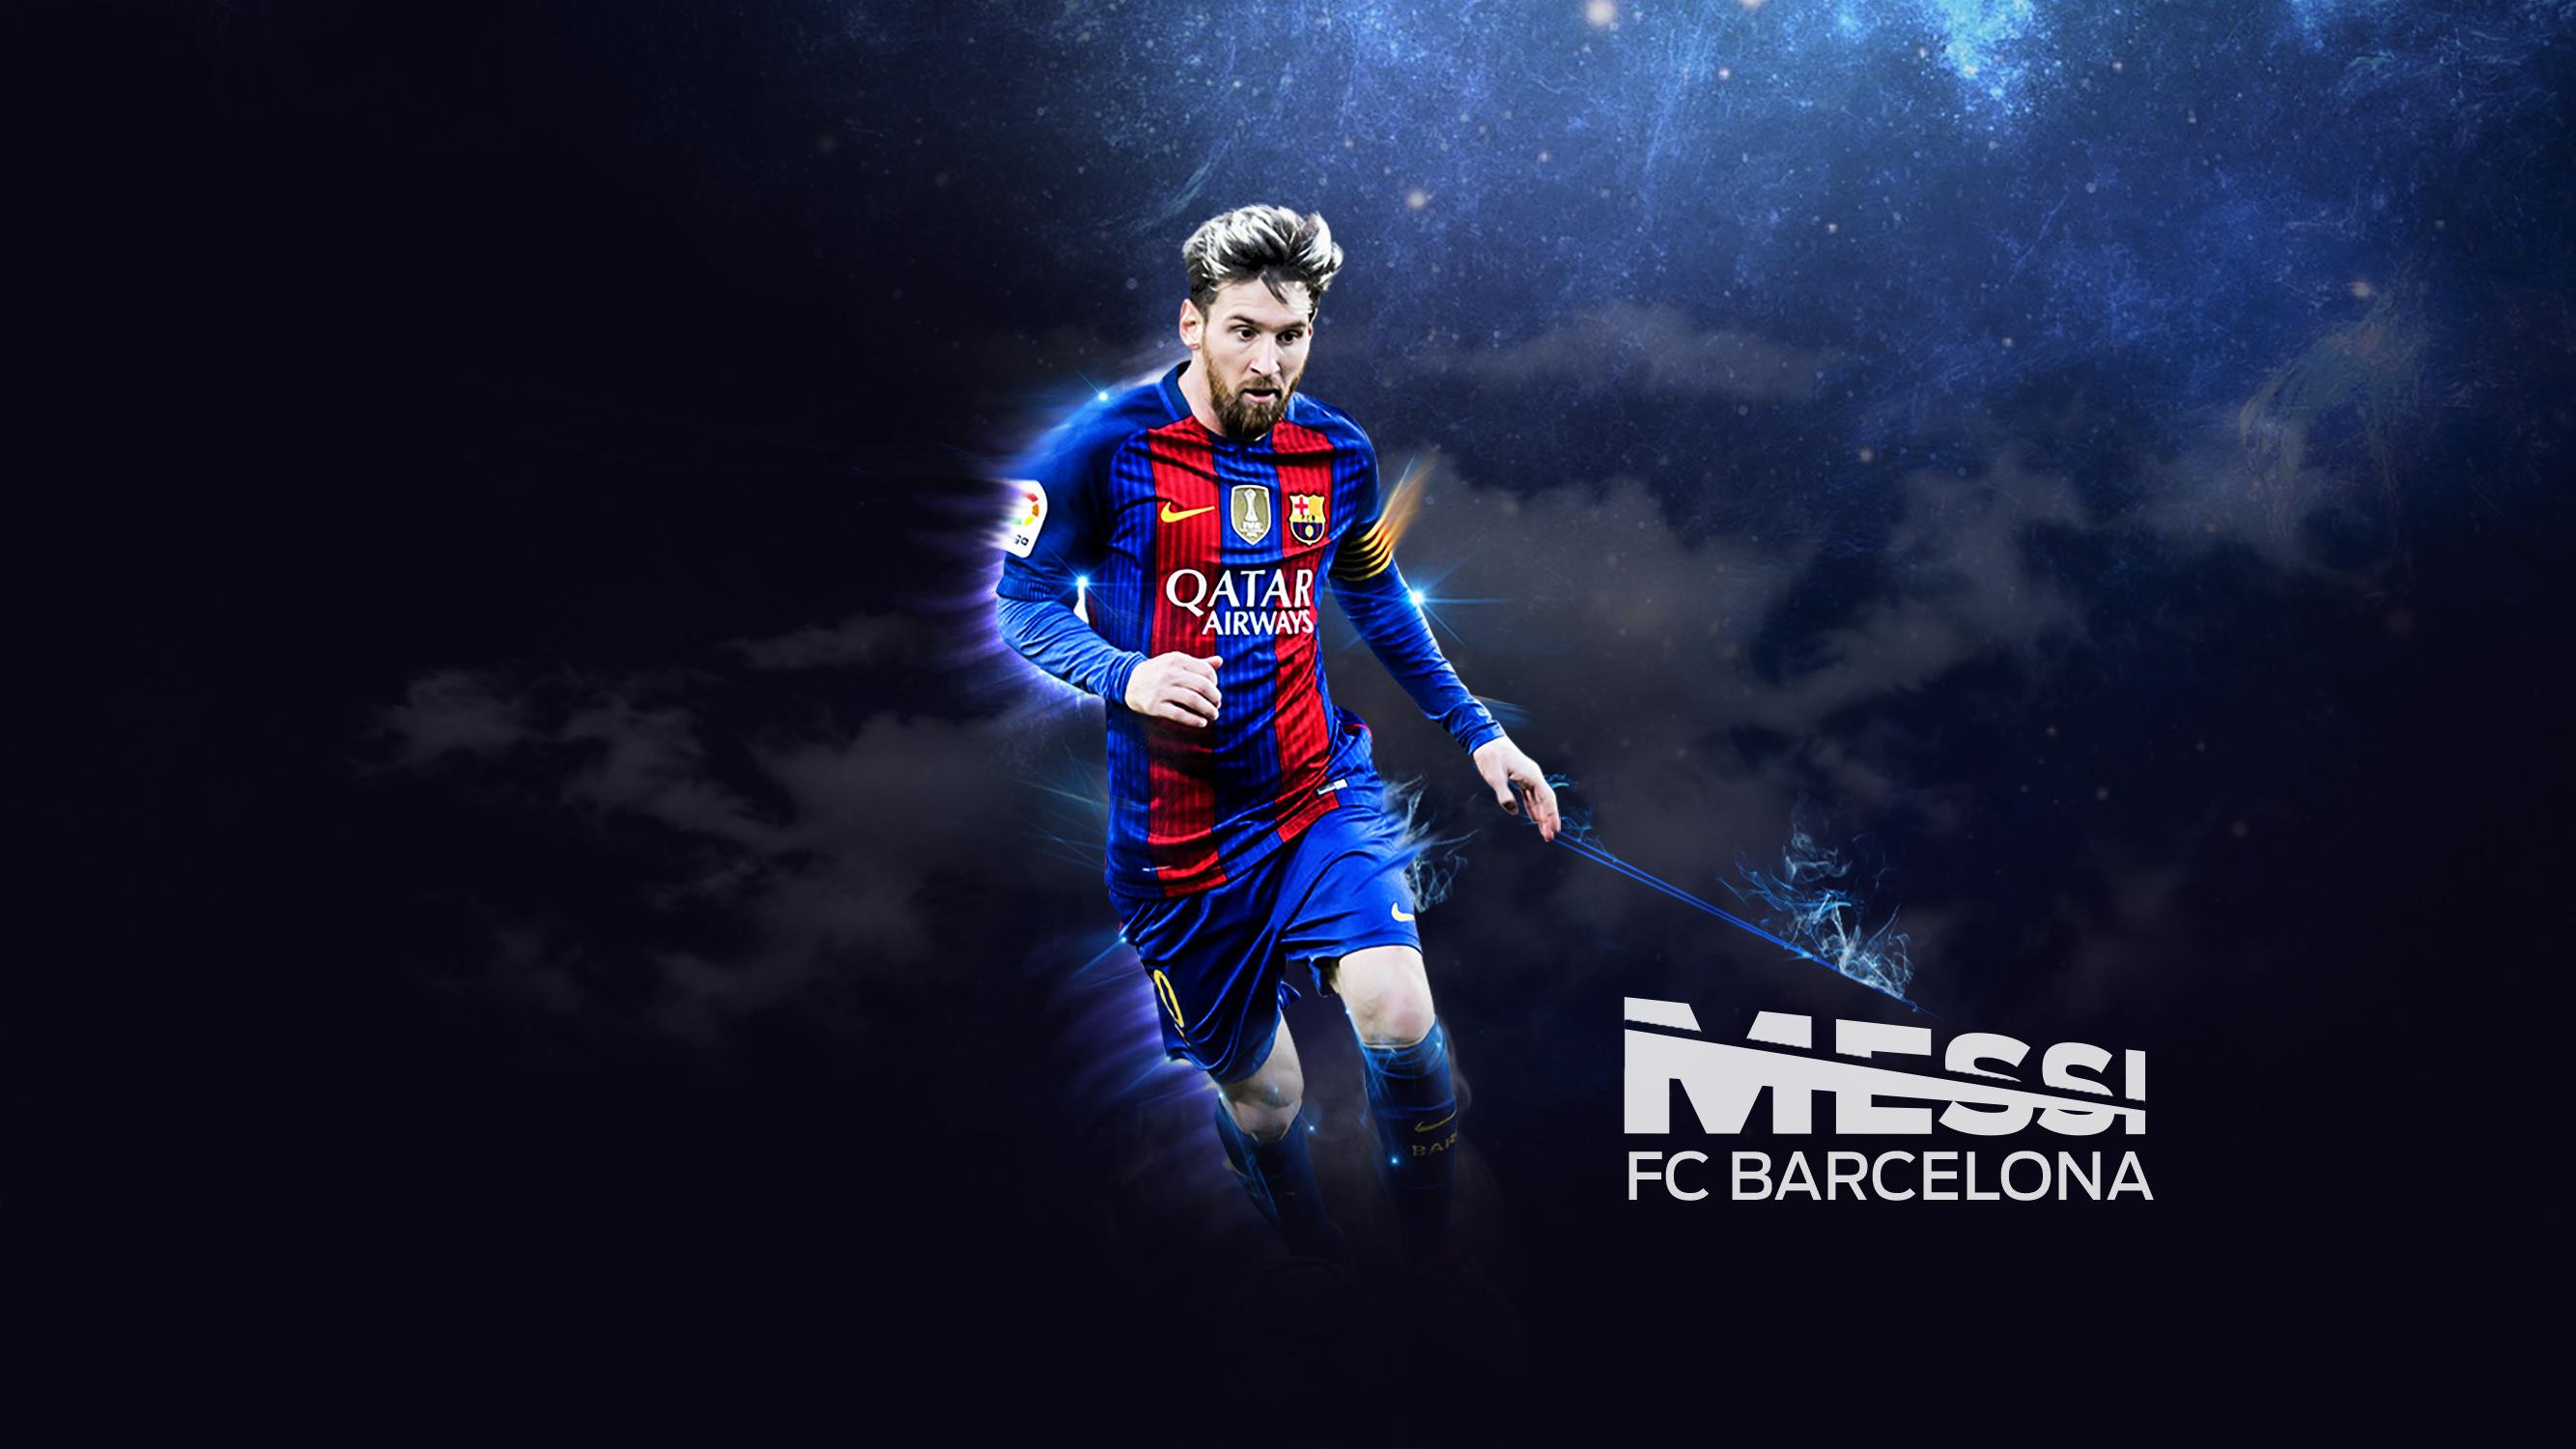 Lionel Messi FC Barcelona Footballer Wallpaper